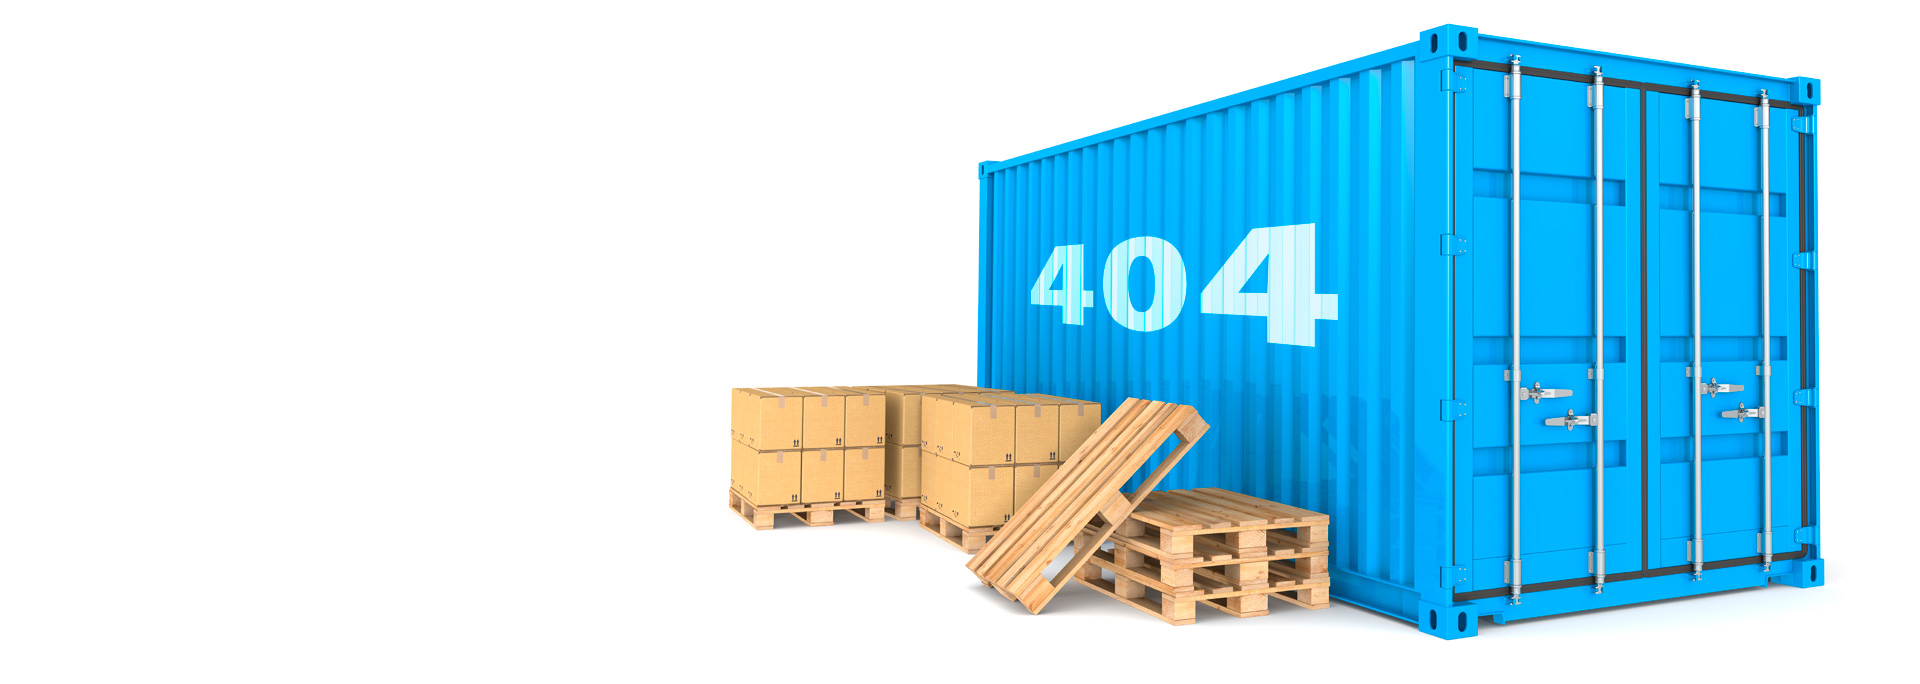 Freight Forwarding, NVOCC, Logistics, Warehouse & Transportation